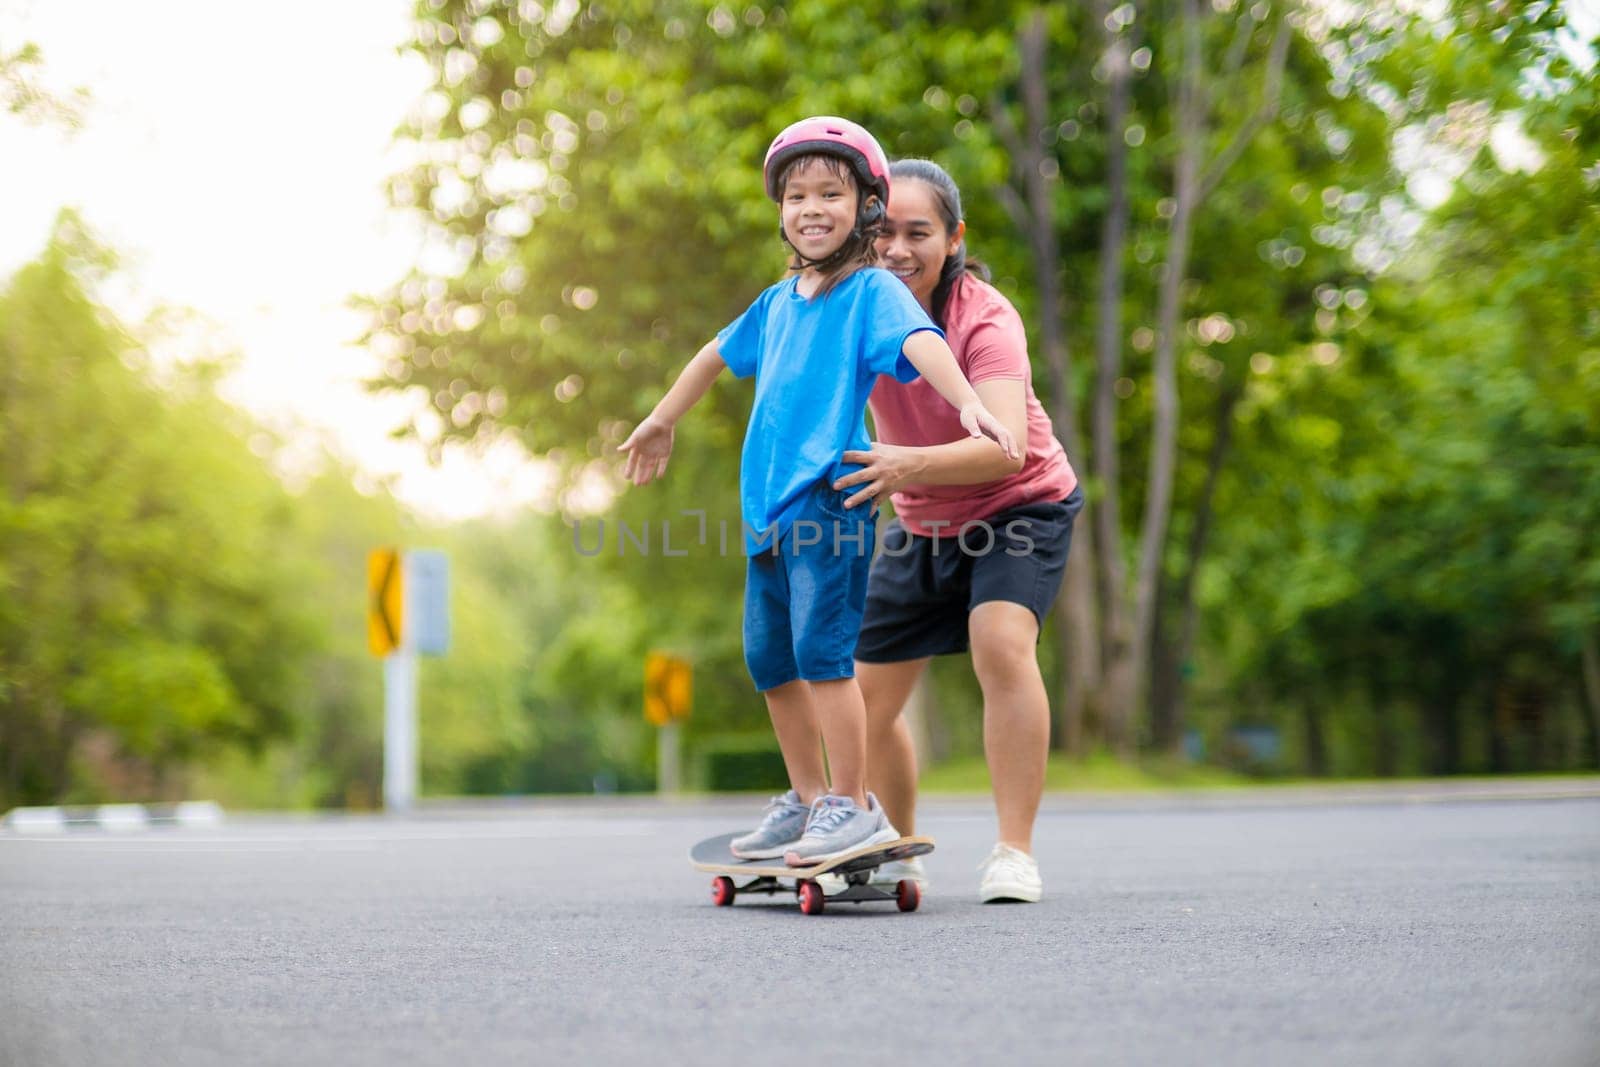 Active little girl and mom enjoy skateboarding. Cute little girl wearing helmet practicing skateboarding in park. Mother trains her daughter to skateboard. Outdoor sports for children.